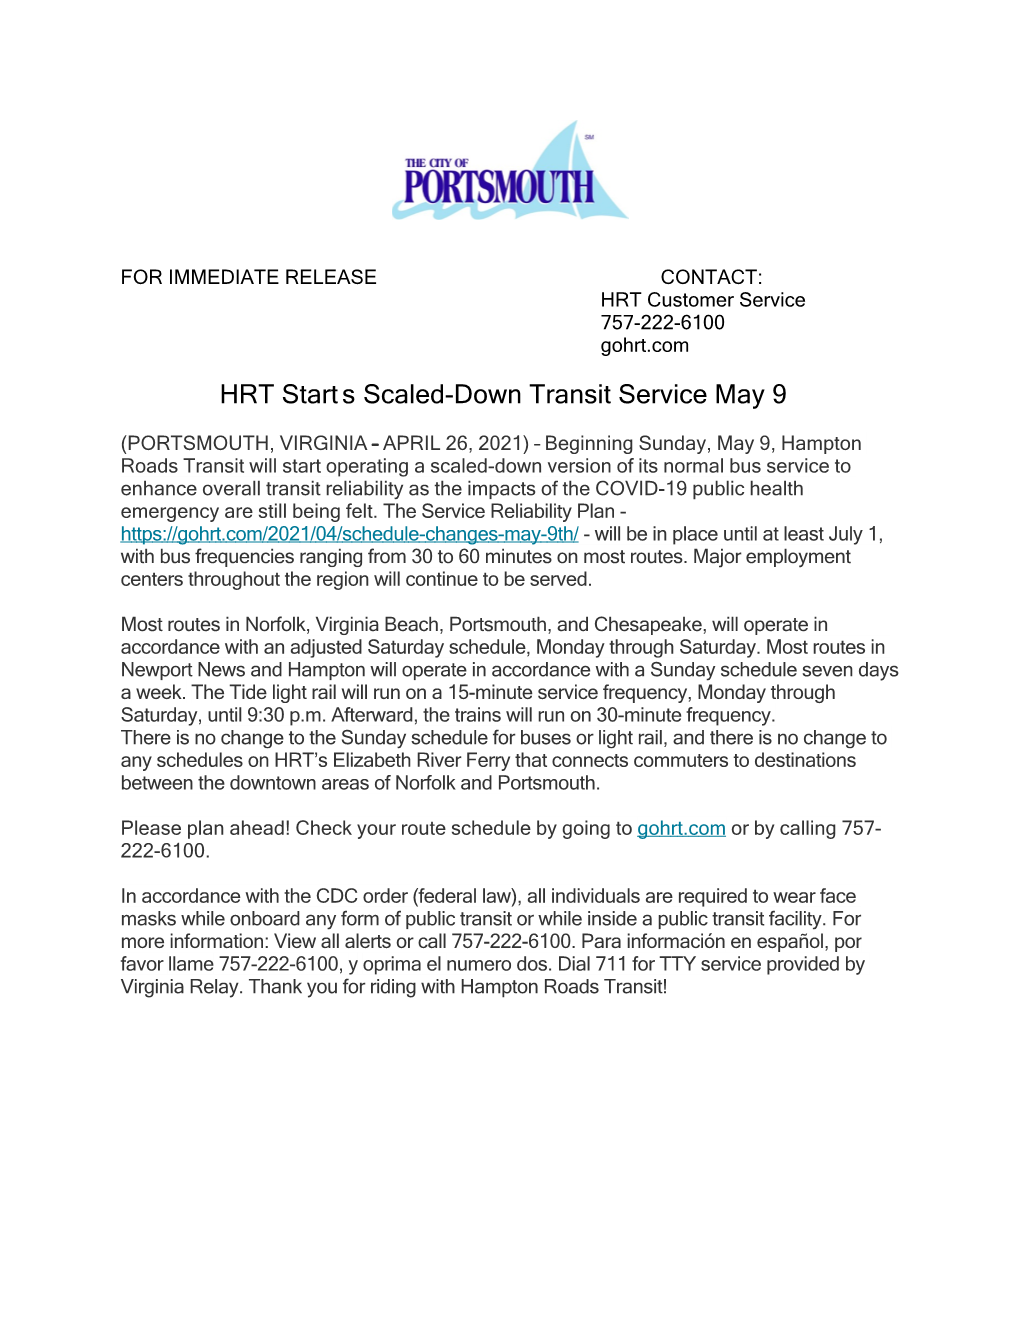 HRT Start S Scaled-Down Transit Service May 9